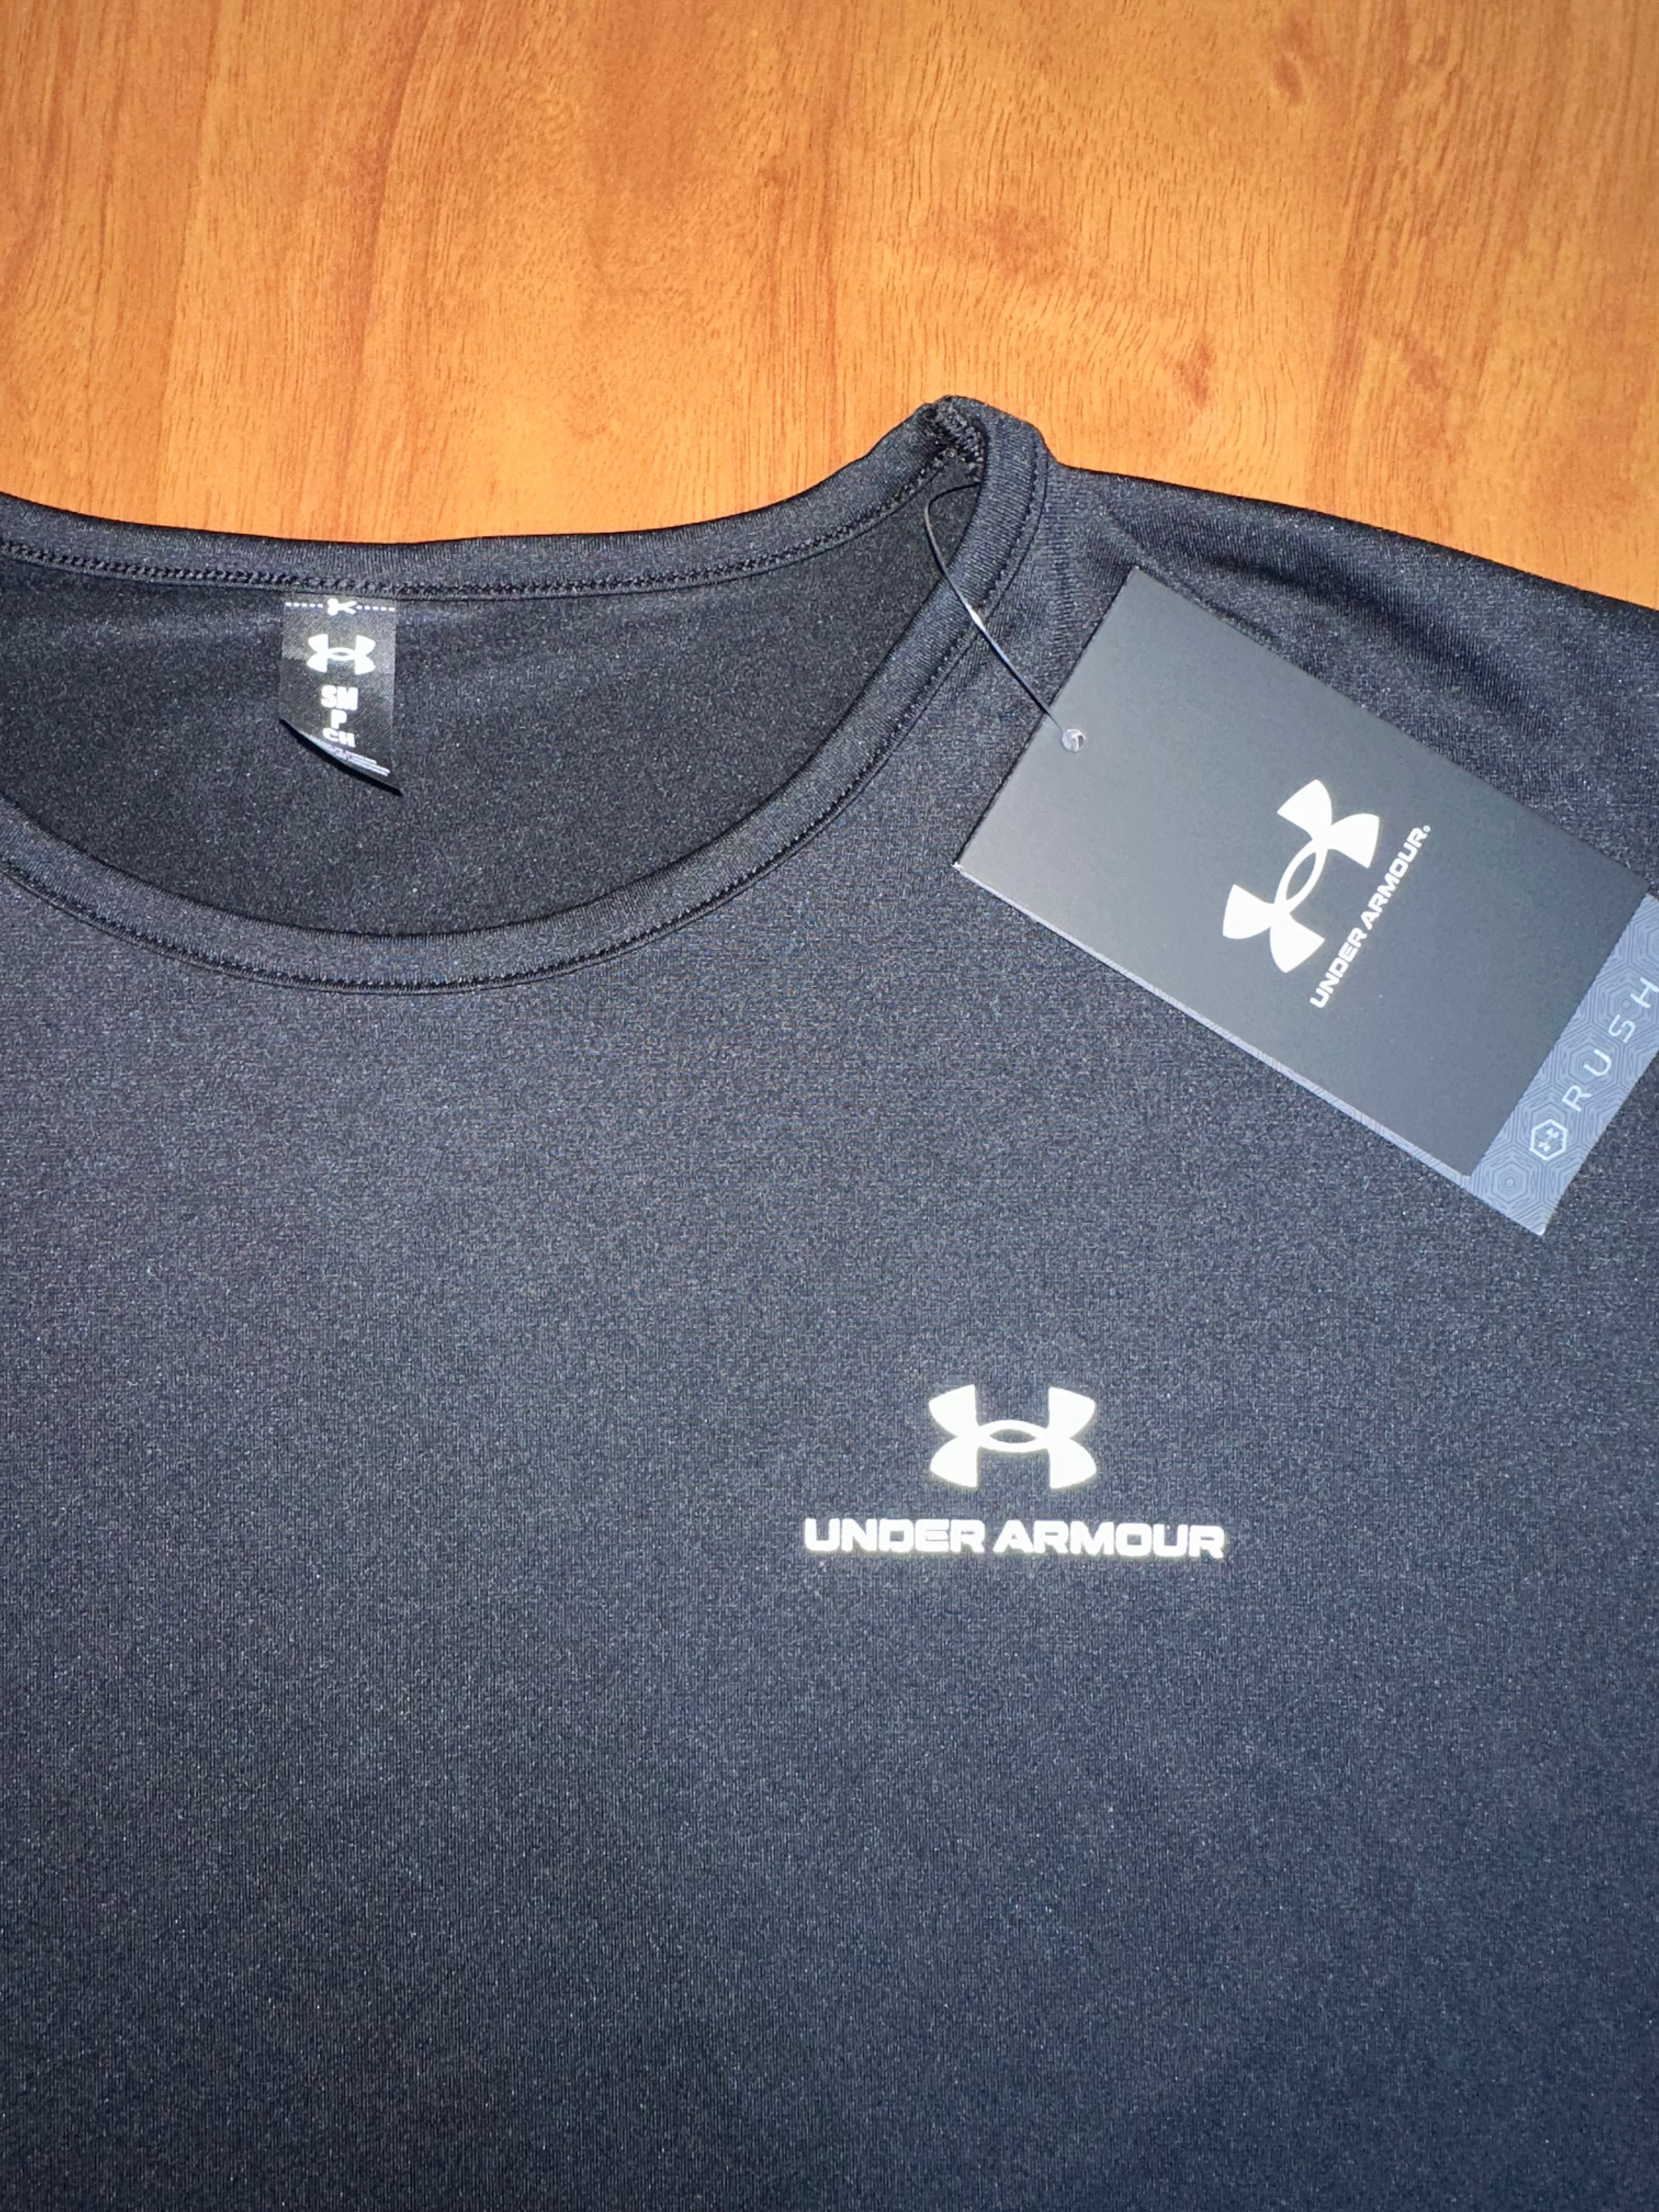 Продам женскую футболку Under Armour, р. S.